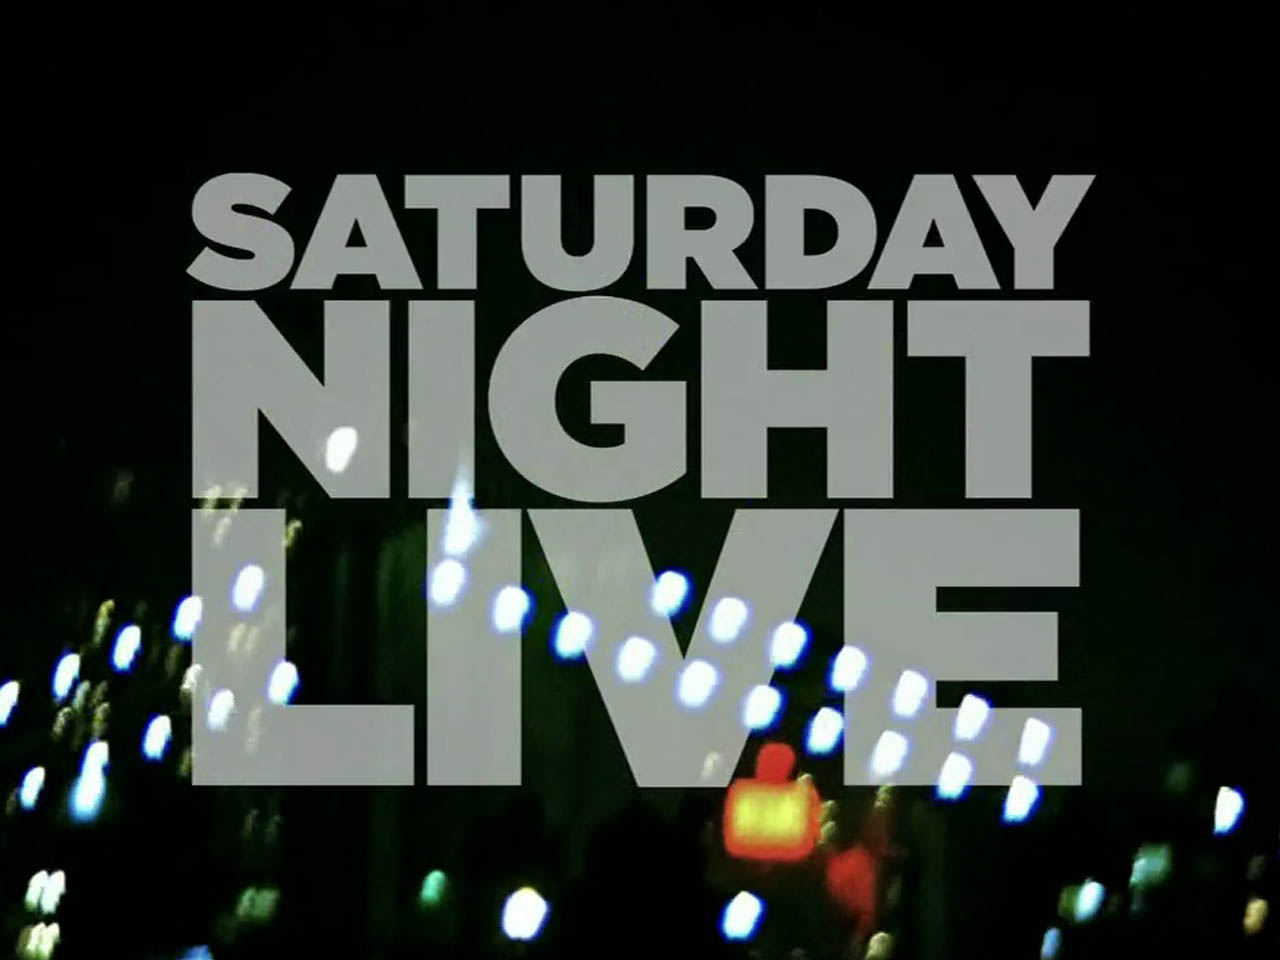 On Saturday Night или at Saturday Night. Saturday Night Live шрифт.